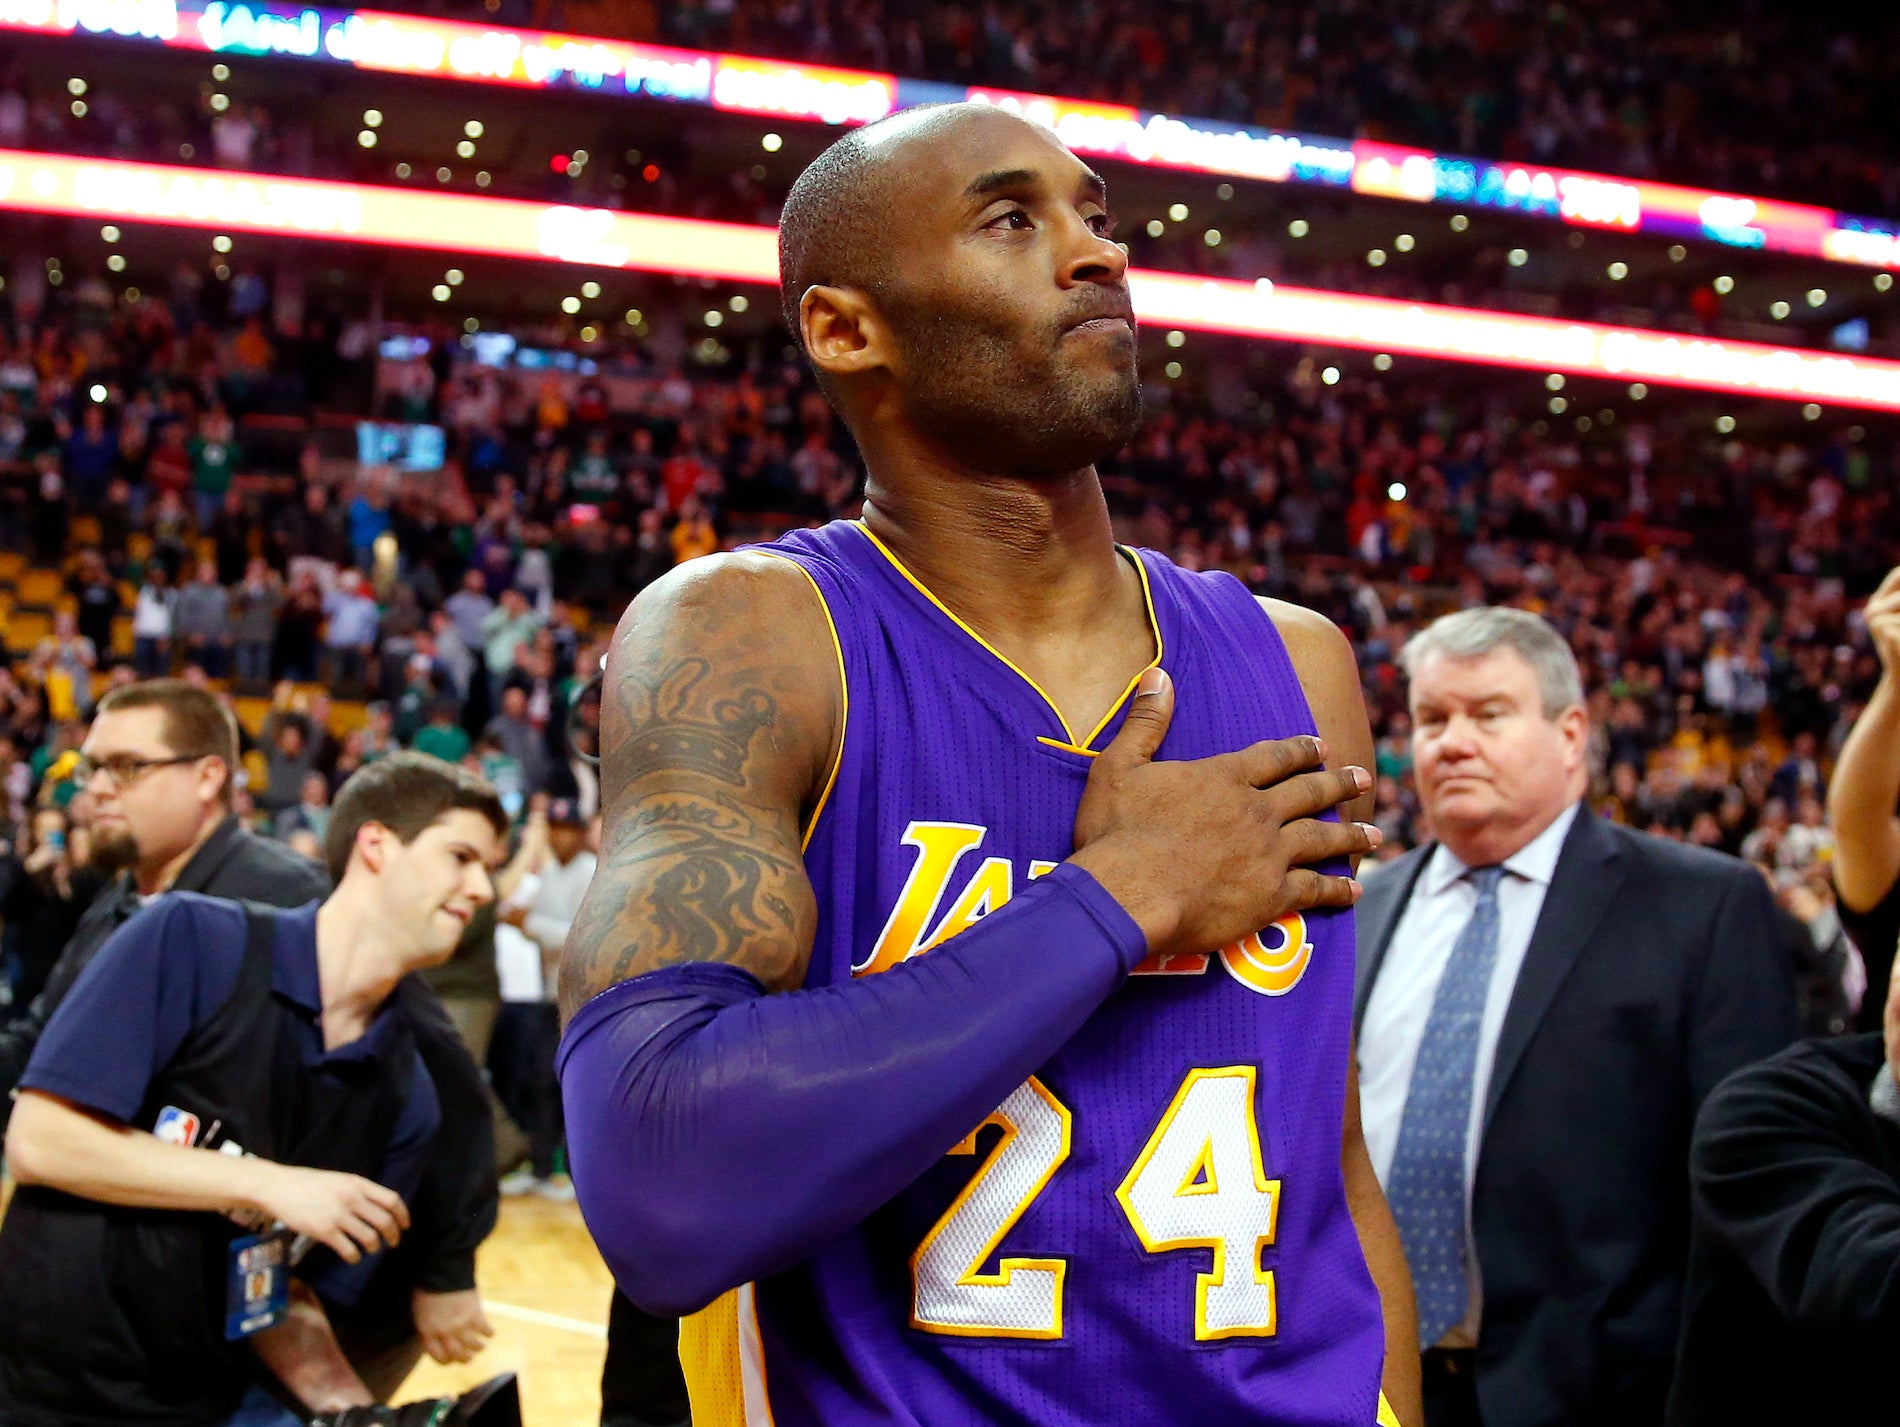 Kobe Bryant Left Deep Legacy in LA Sports, Basketball World